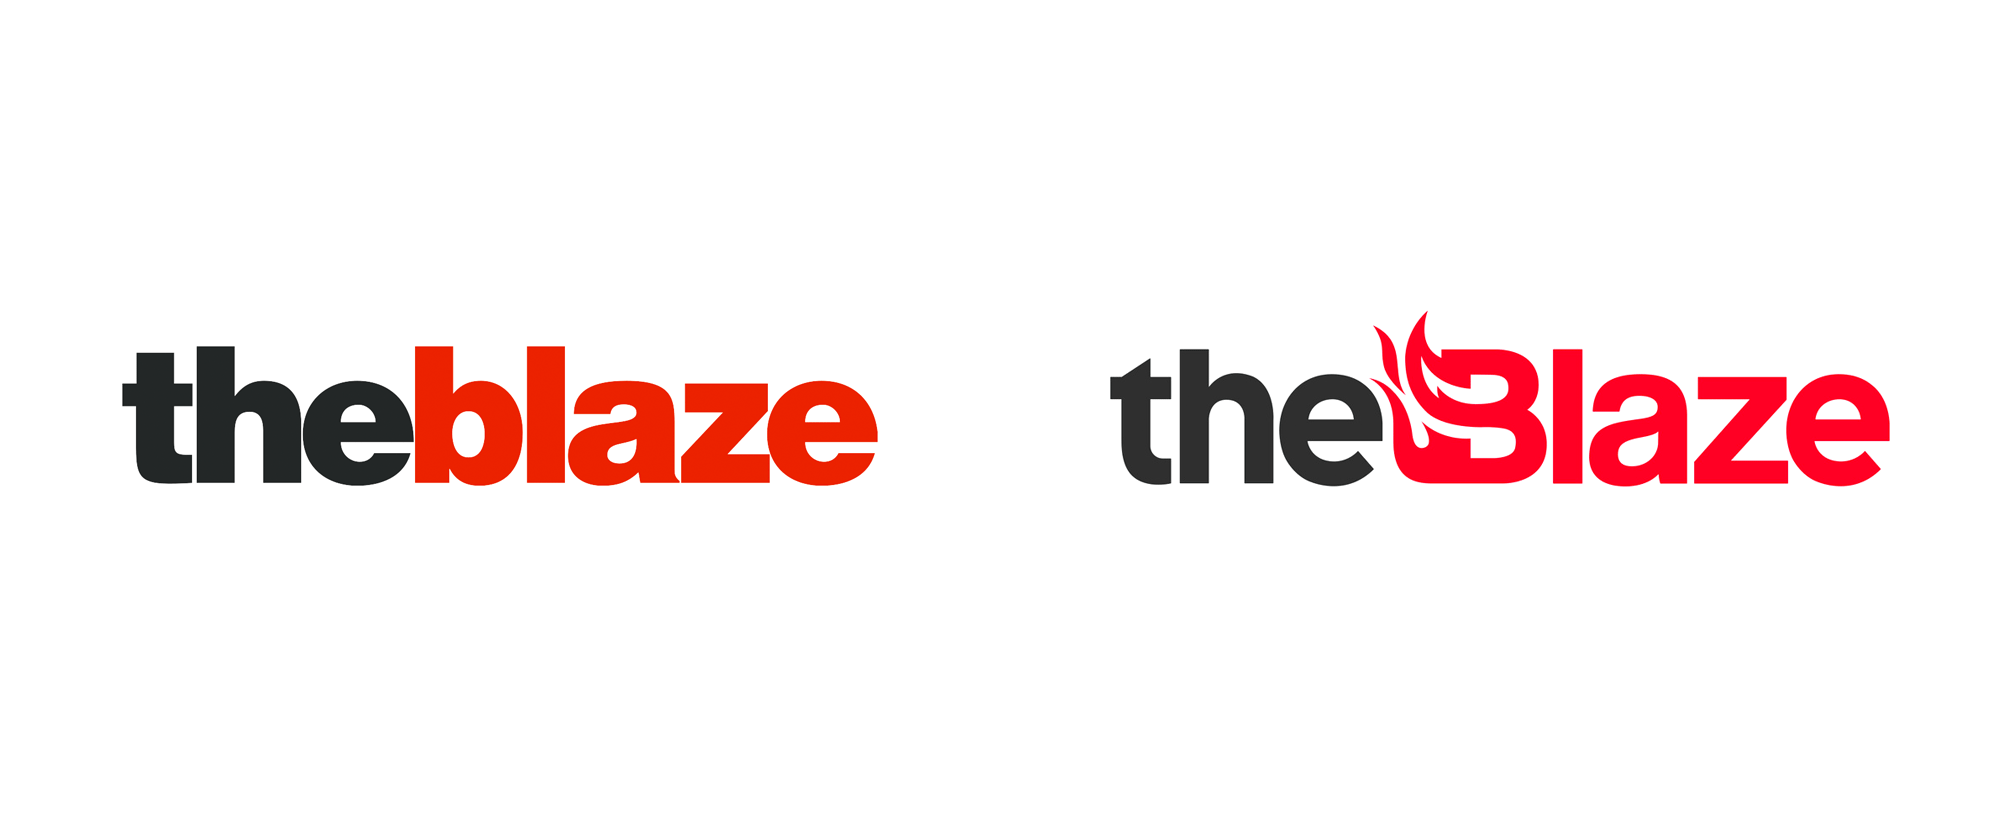 Blaze Logo - Brand New: New Logos and Identity for The Blaze and Blaze Media done ...